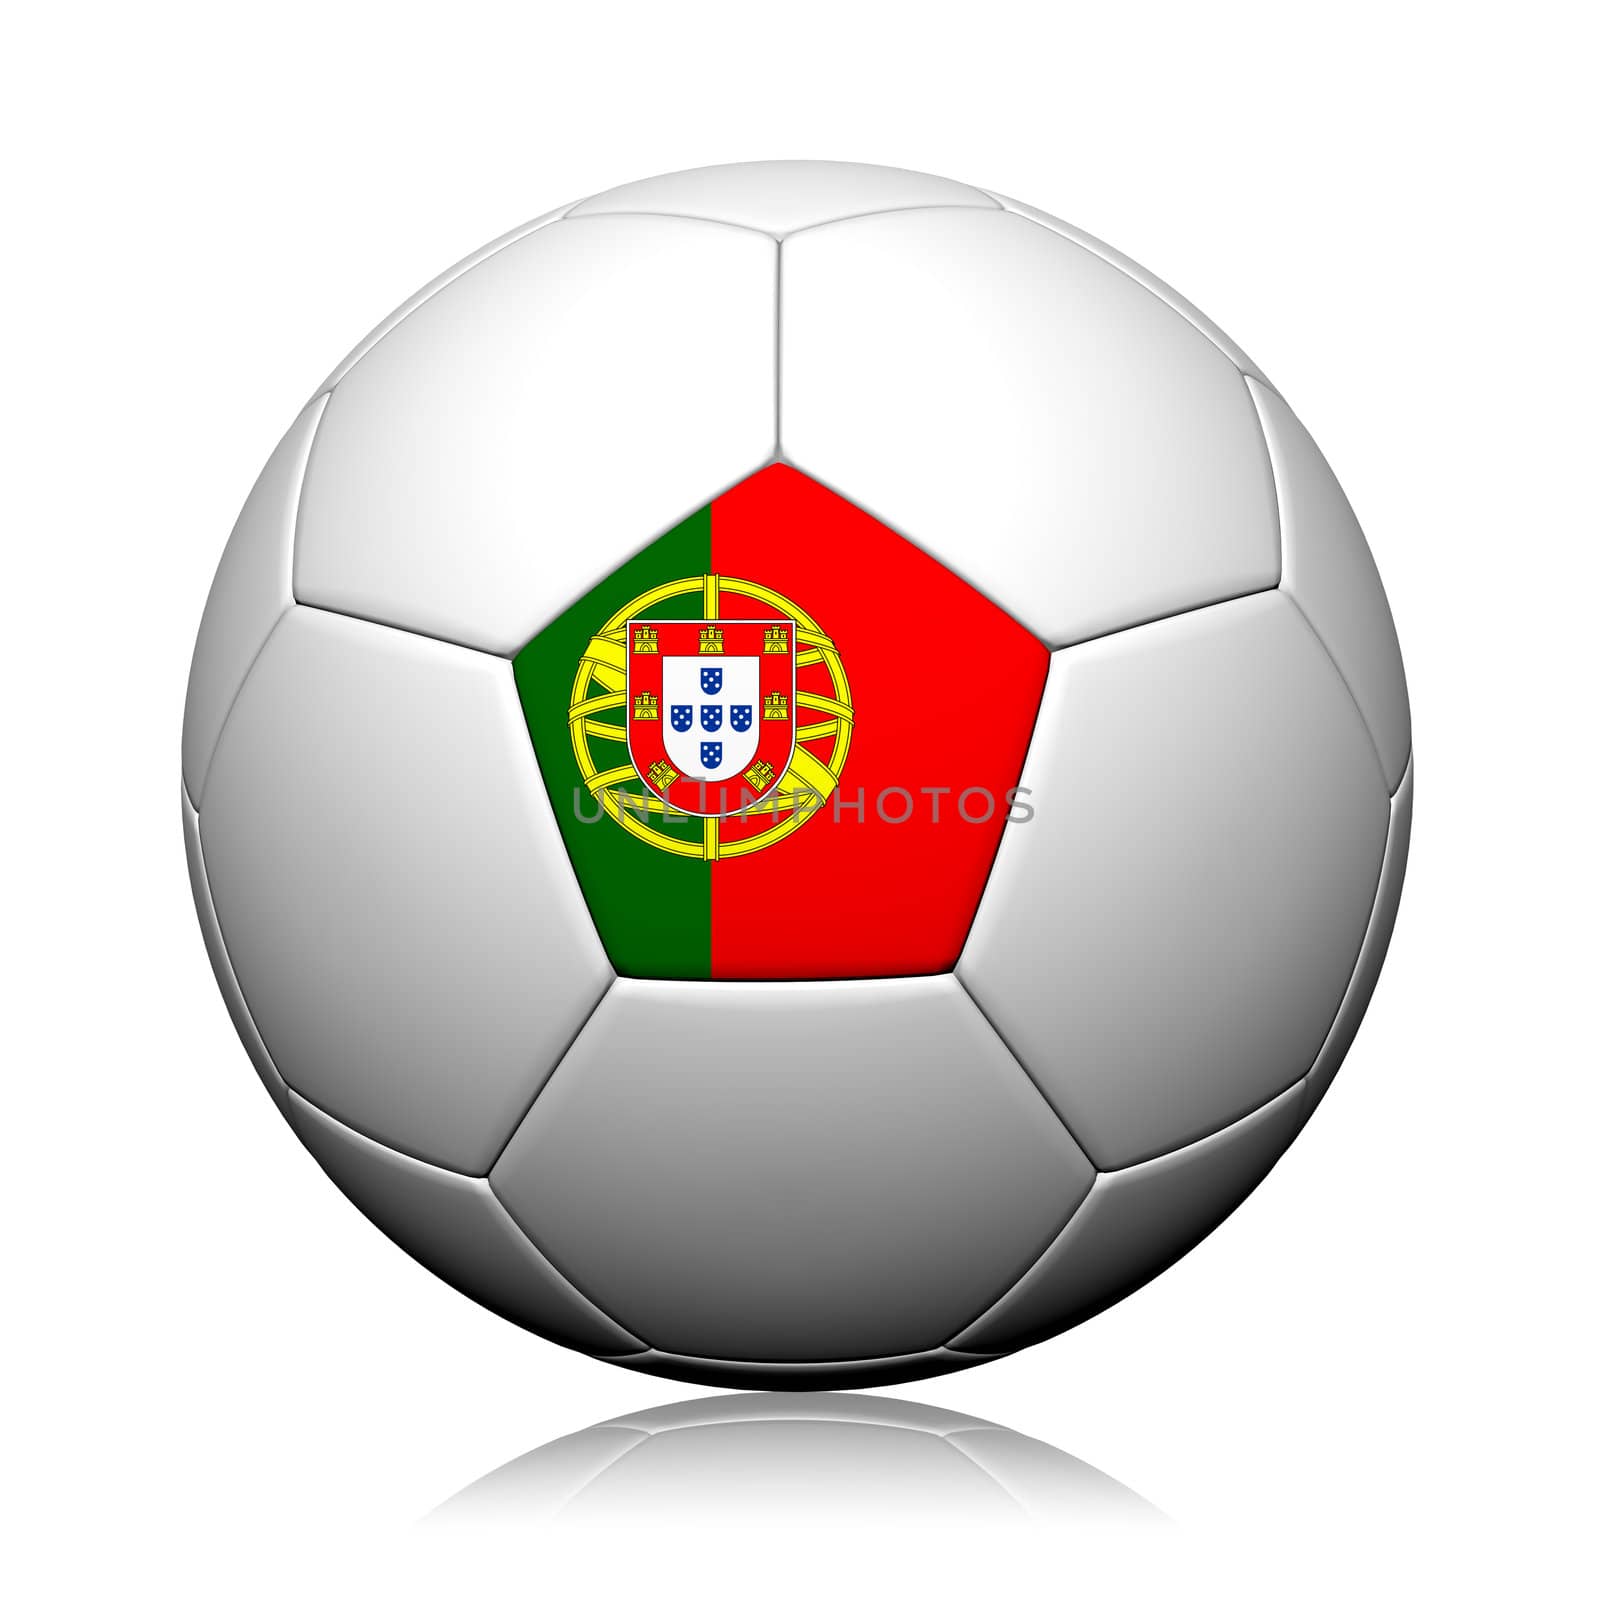 Porgutal Flag Pattern 3d rendering of a soccer ball